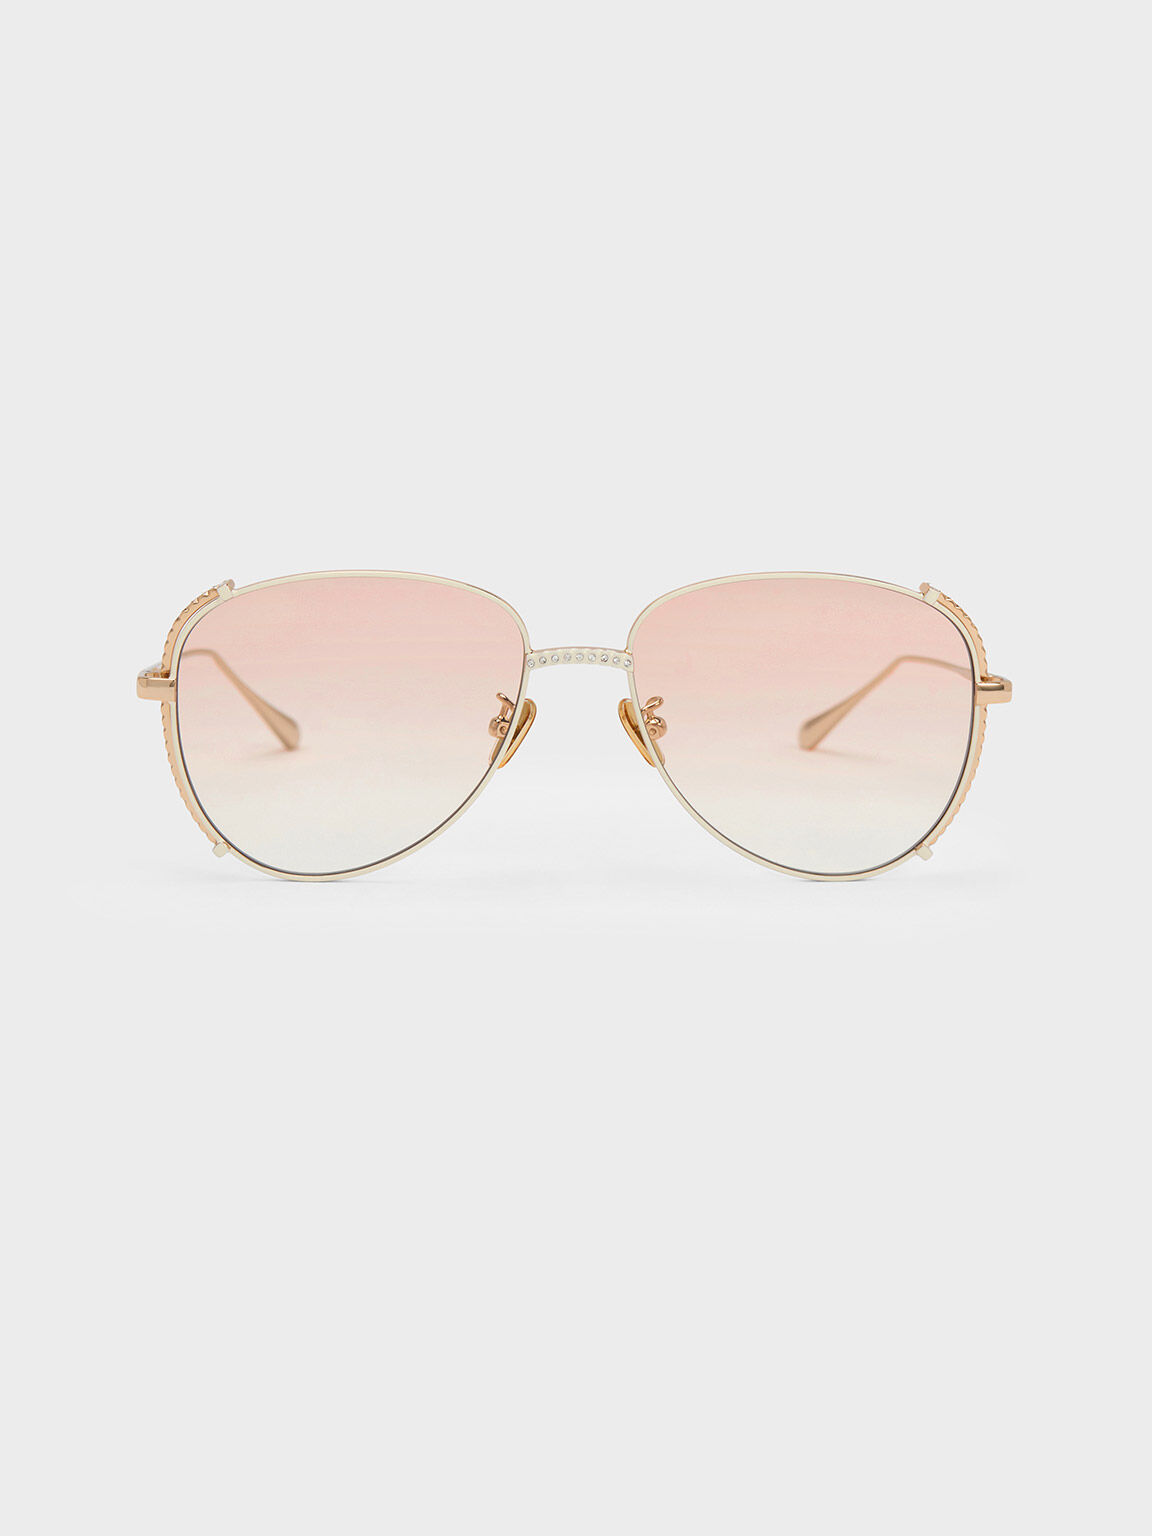 Gem-Embellished Wireframe Aviator Sunglasses, Cream, hi-res